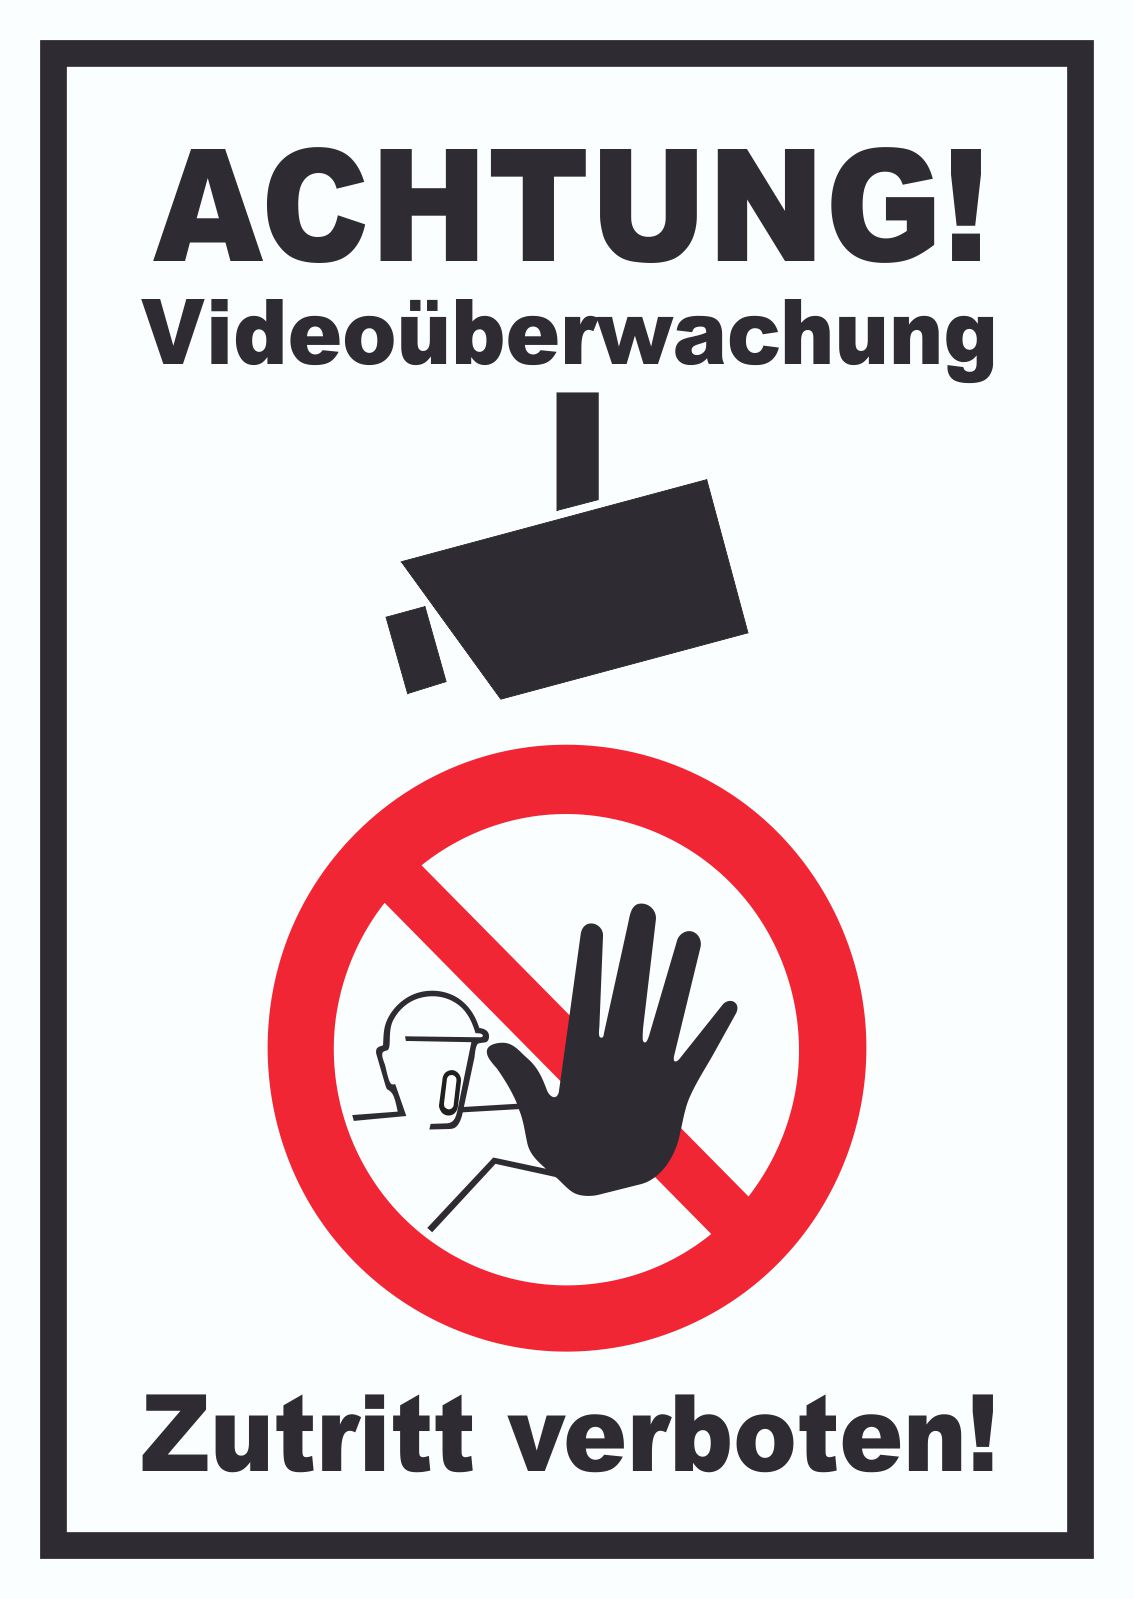 https://www.hb-druck.de/media/image/ab/b0/42/achtung-videouberwachung-zutritt-verboten-schild-201603224711hbcrlhBRipUlvwQ.jpg